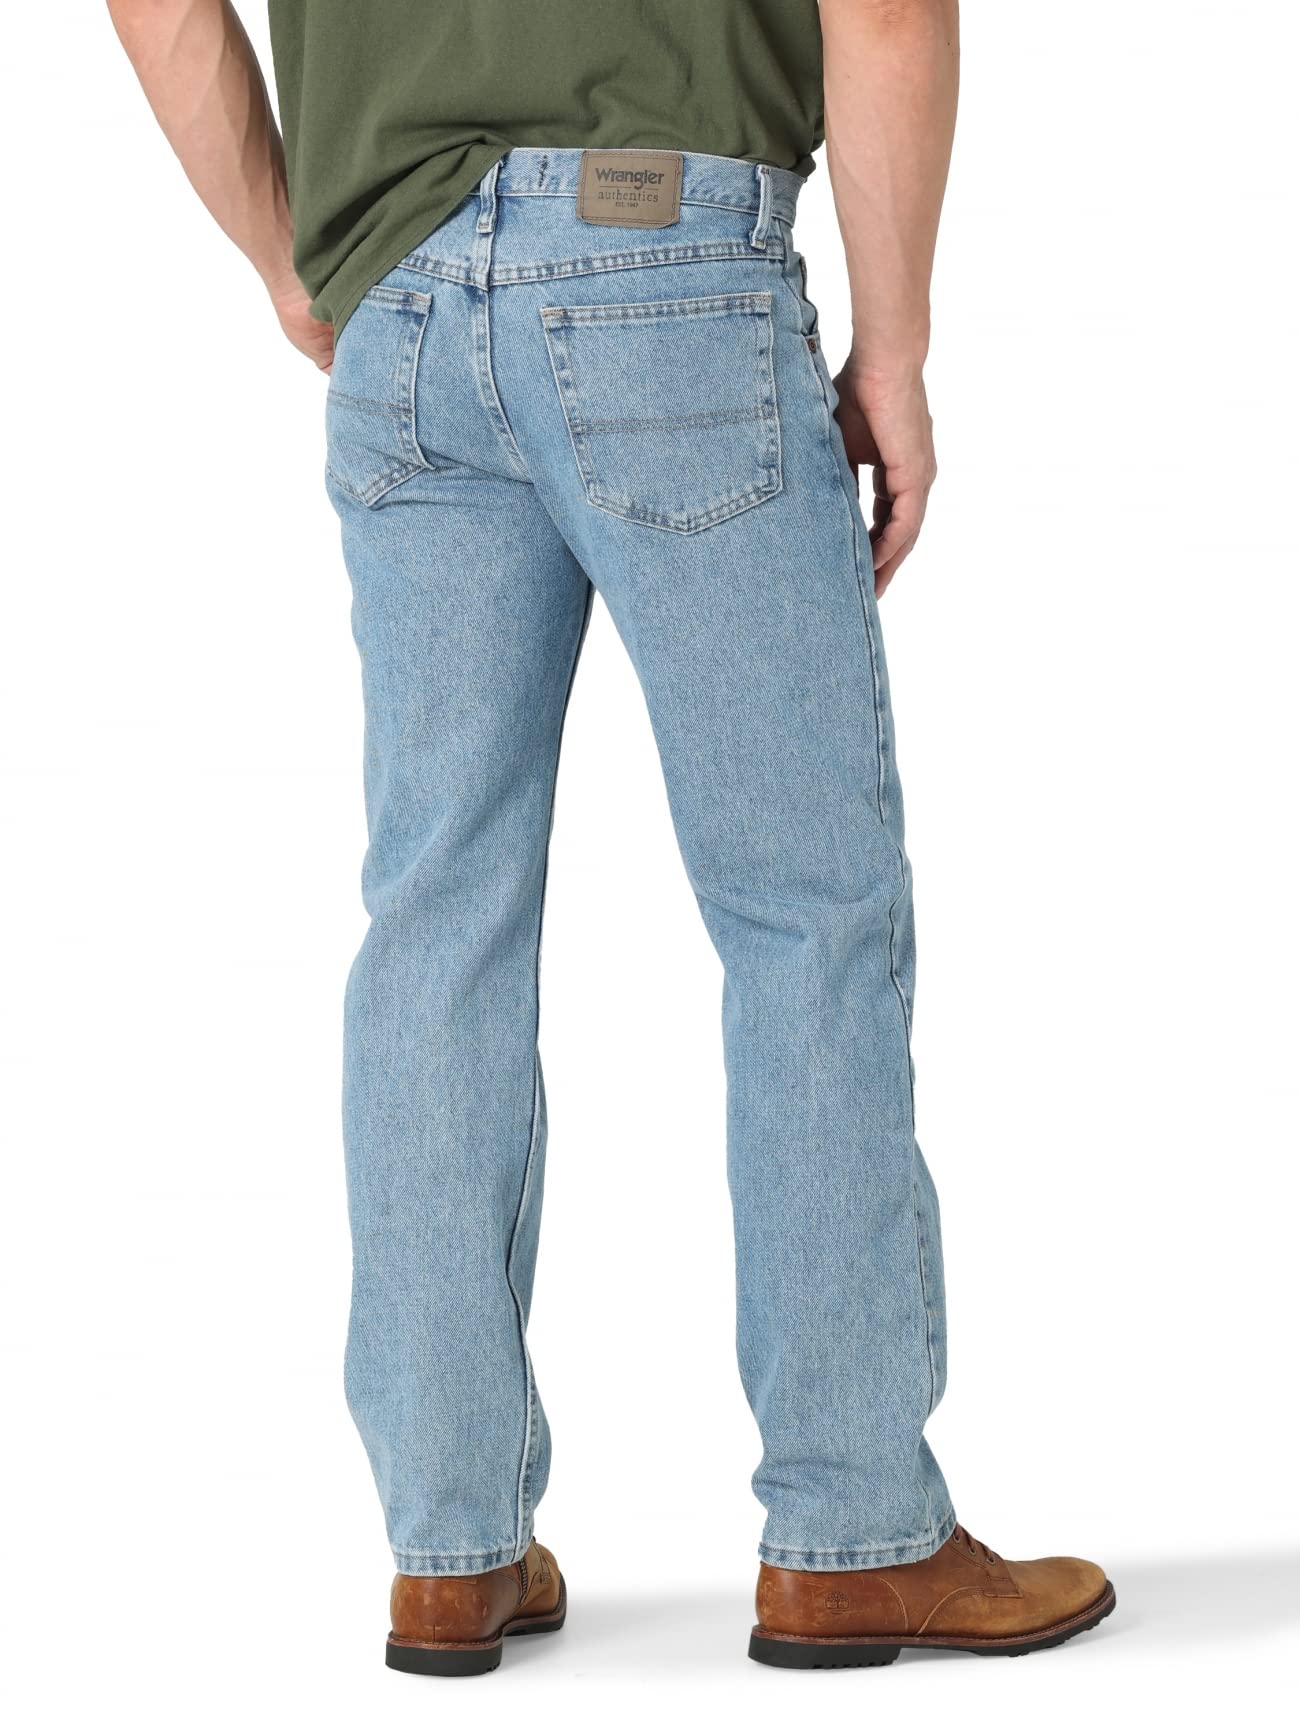 Wrangler Authentics Men's Classic 5-Pocket Regular Fit Cotton Jean, Light Stonewash, 36W x 34L